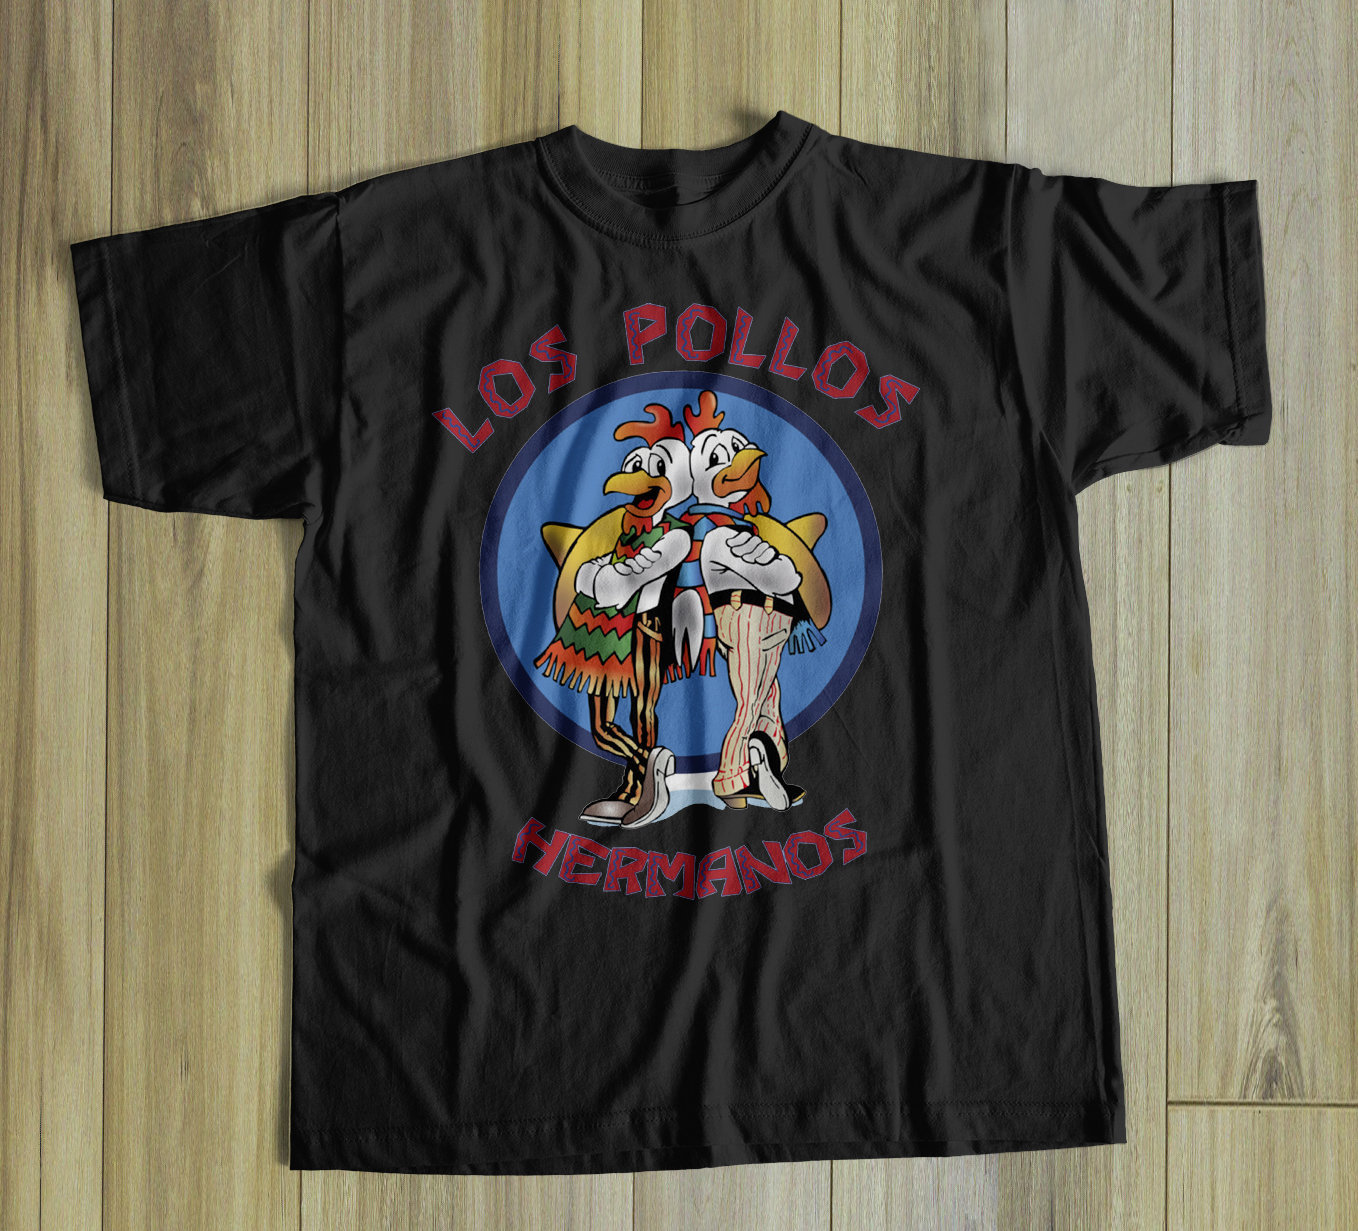 Los-pollos-hermanos-shirt-breaking-bad-shirt-walter-white-tshirt-jesse-pinkman-t-shirt-breaking-bad-cosplay-el-camino-shirt